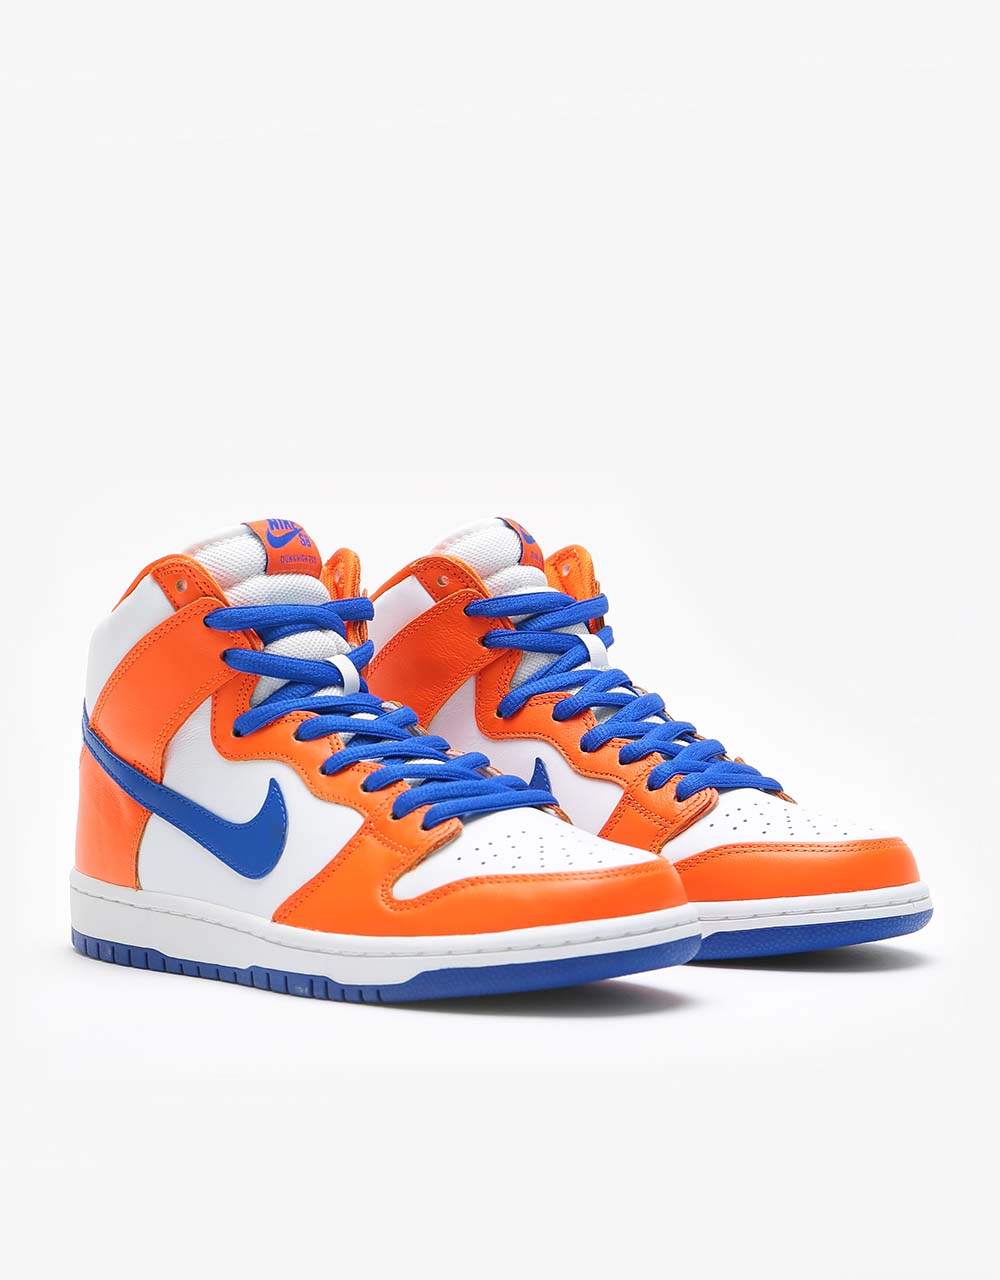 Nike SB Dunk High 'Supa' QS Skate Shoes - Safety Orange/Hyper Blue-White